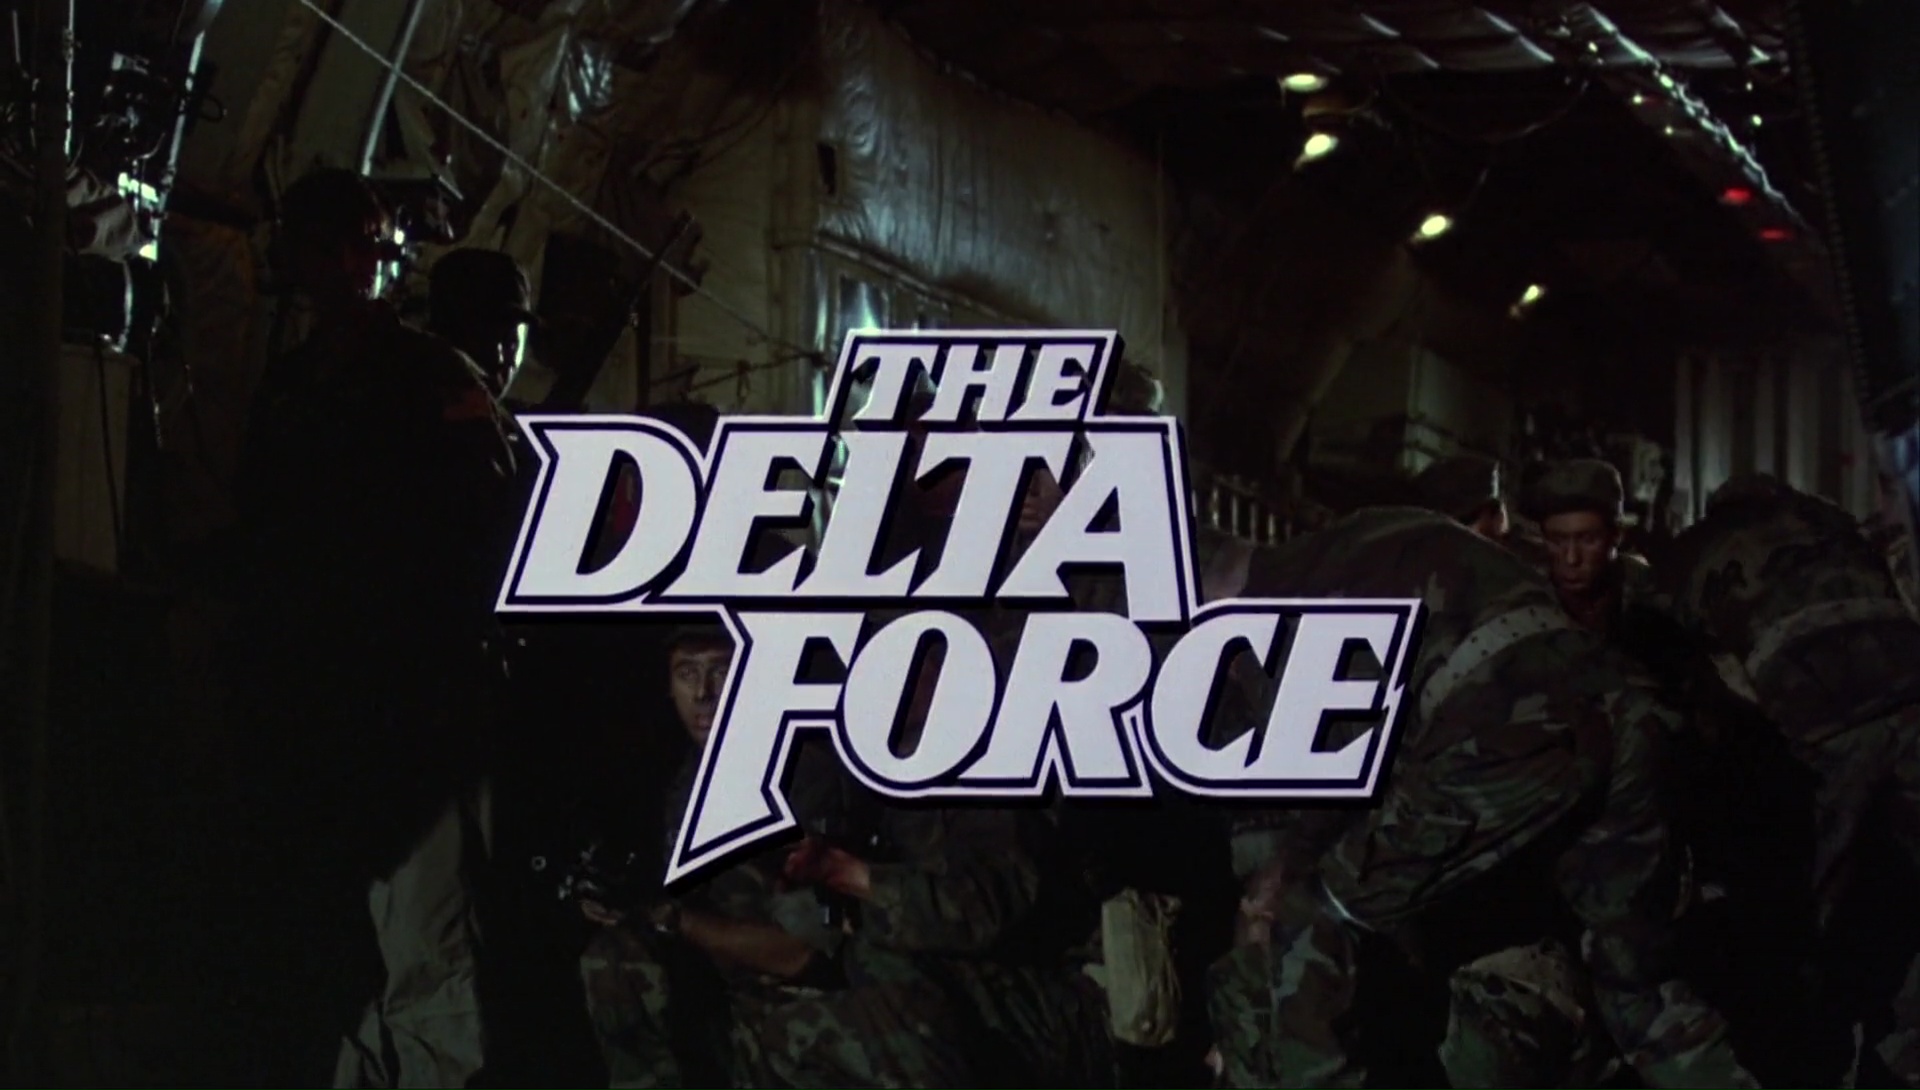 DELTA FORCE (The Delta Force) de Menahem Golan (1986)